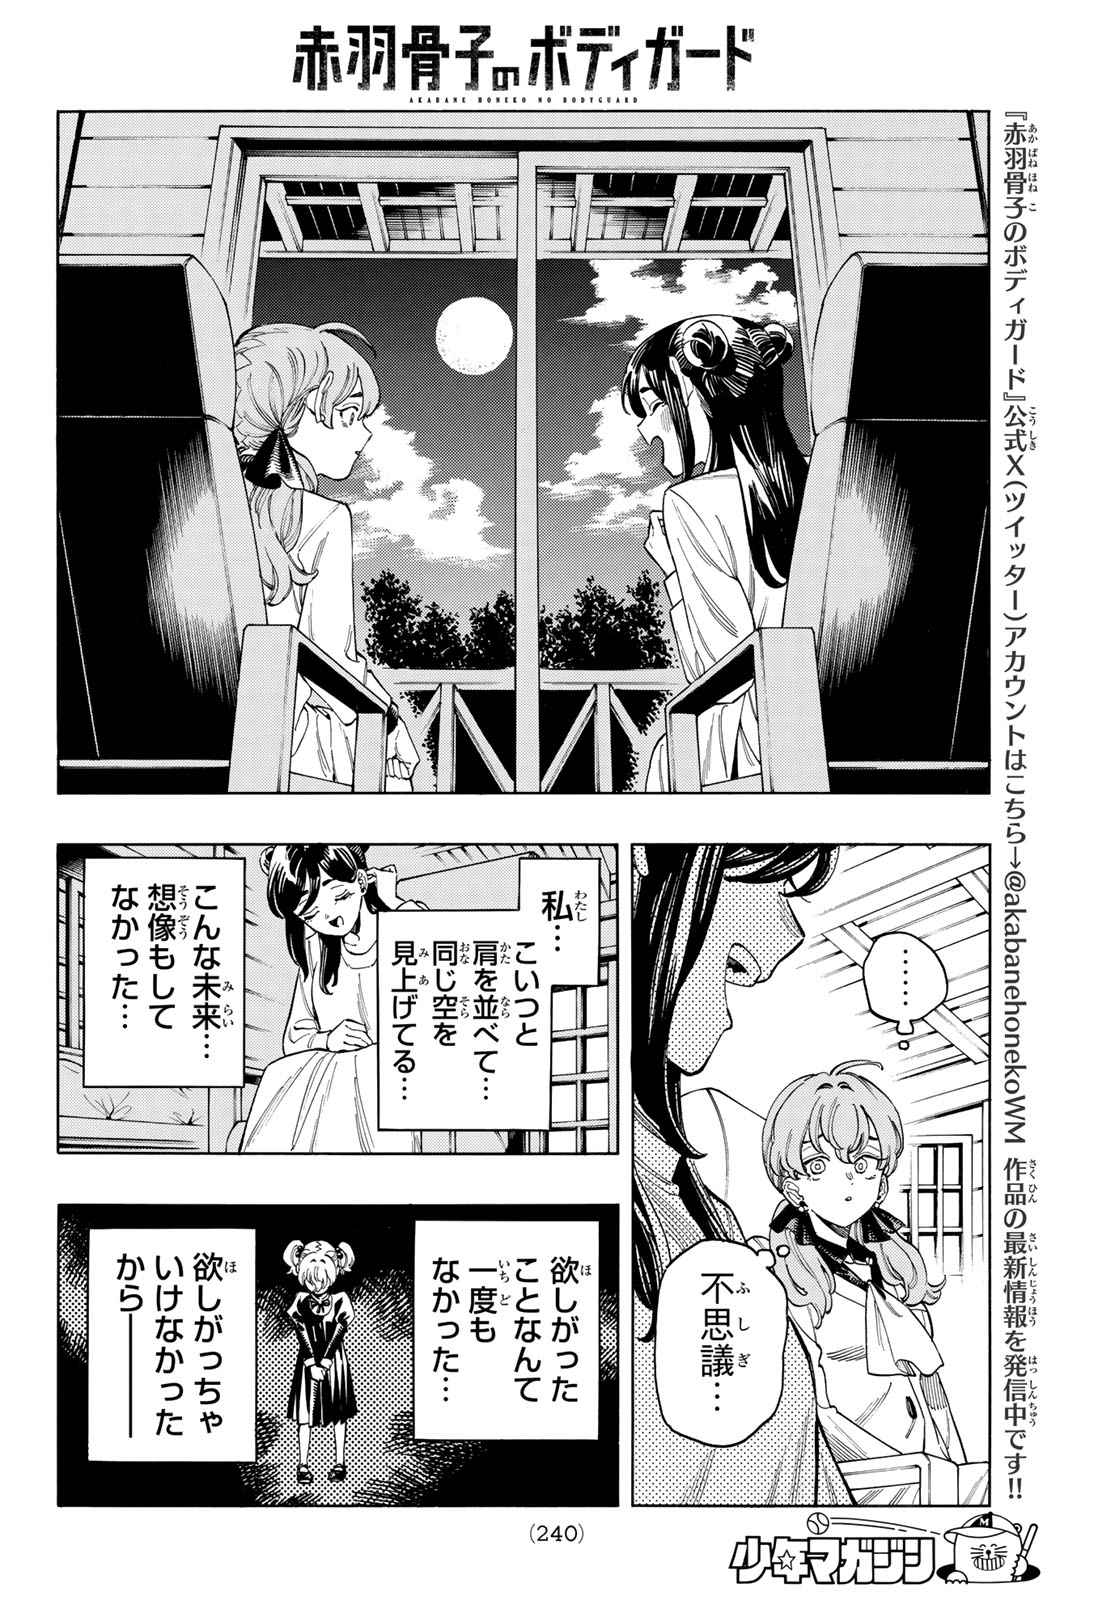 Akabane Honeko no Bodyguard - Chapter 88 - Page 16